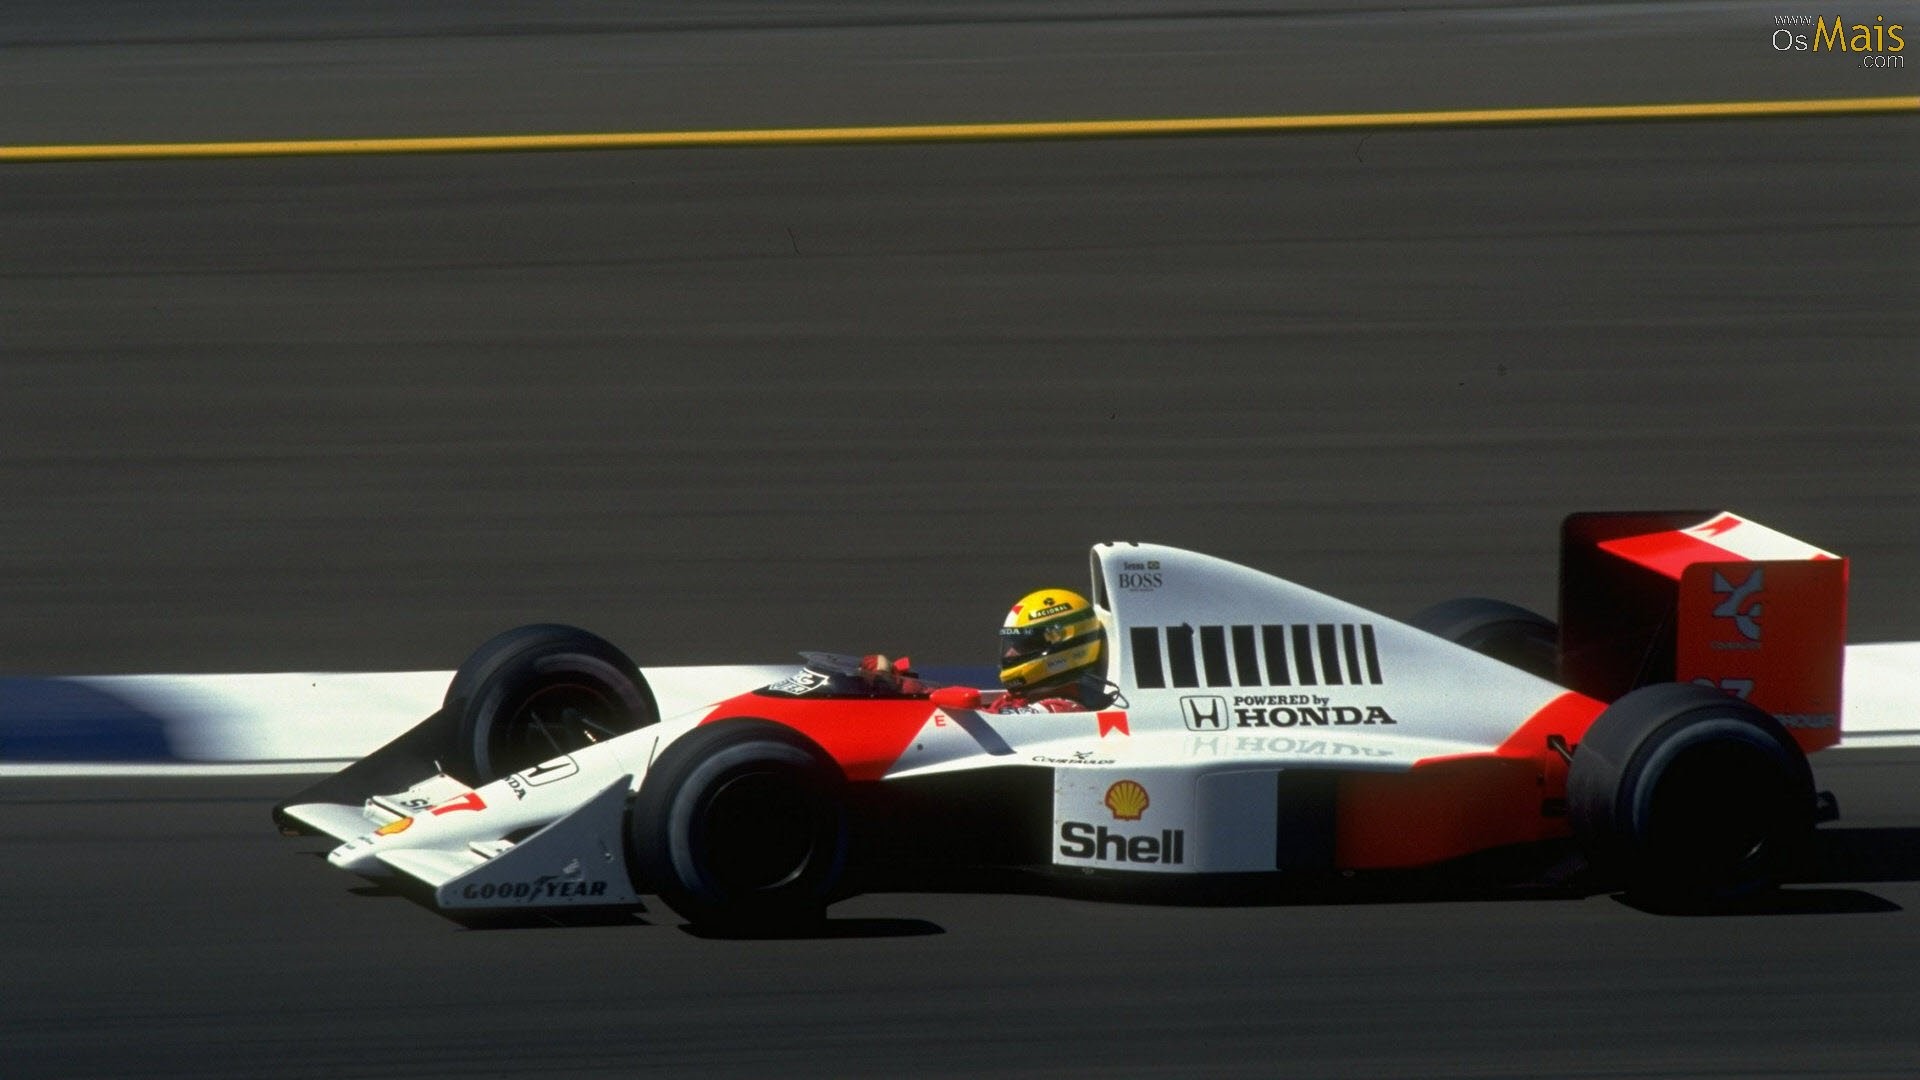 F1 HQ on Twitter  Wallpapers  Legends  Ayrton Senna  httpstcog4We0nup98  Twitter